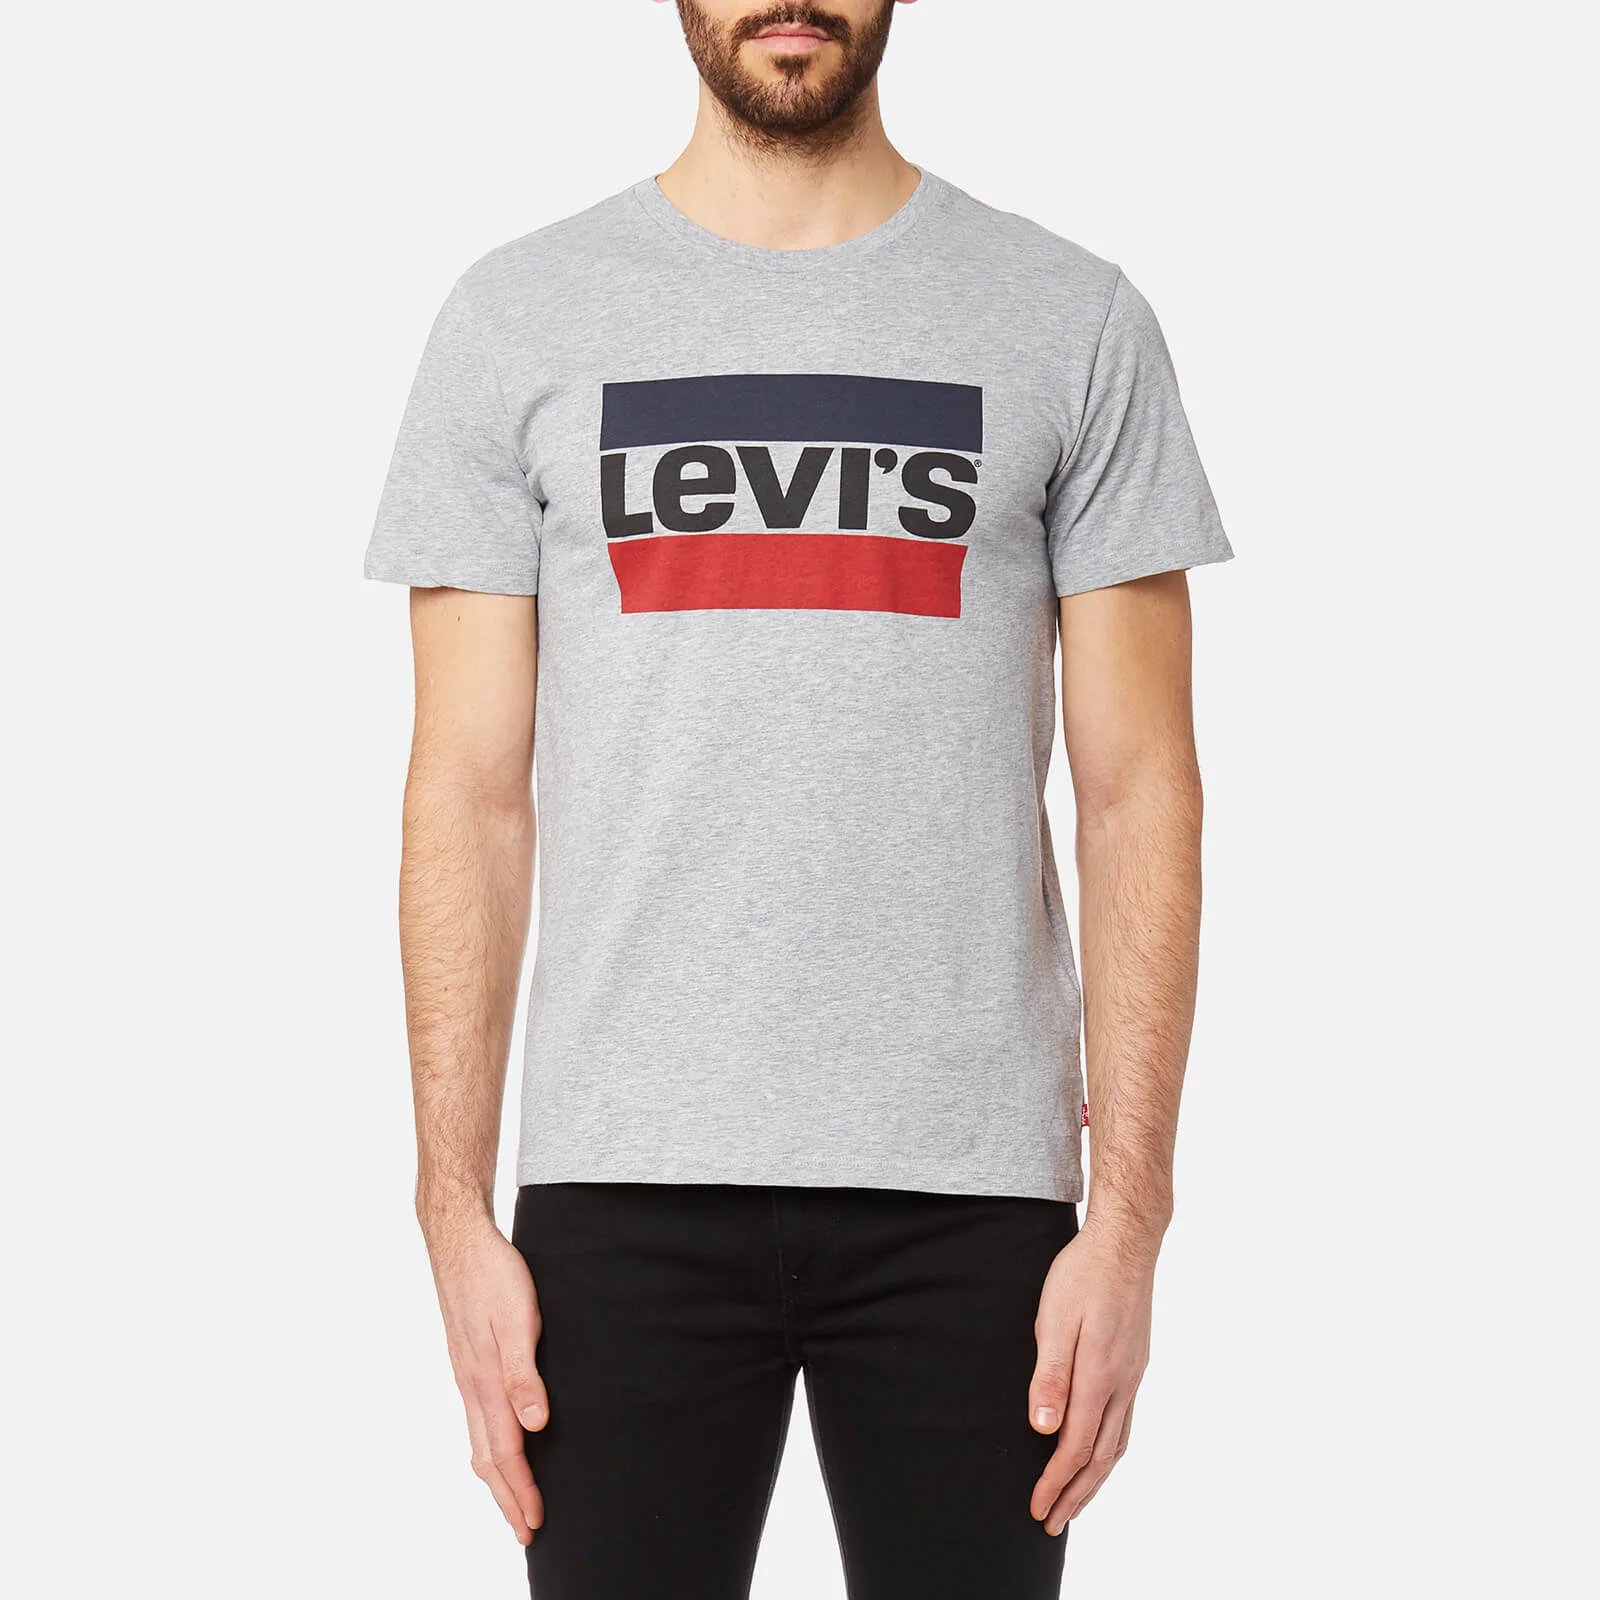 Levi's Men's Sportswear Graphic T-Shirt - Grey Image 1